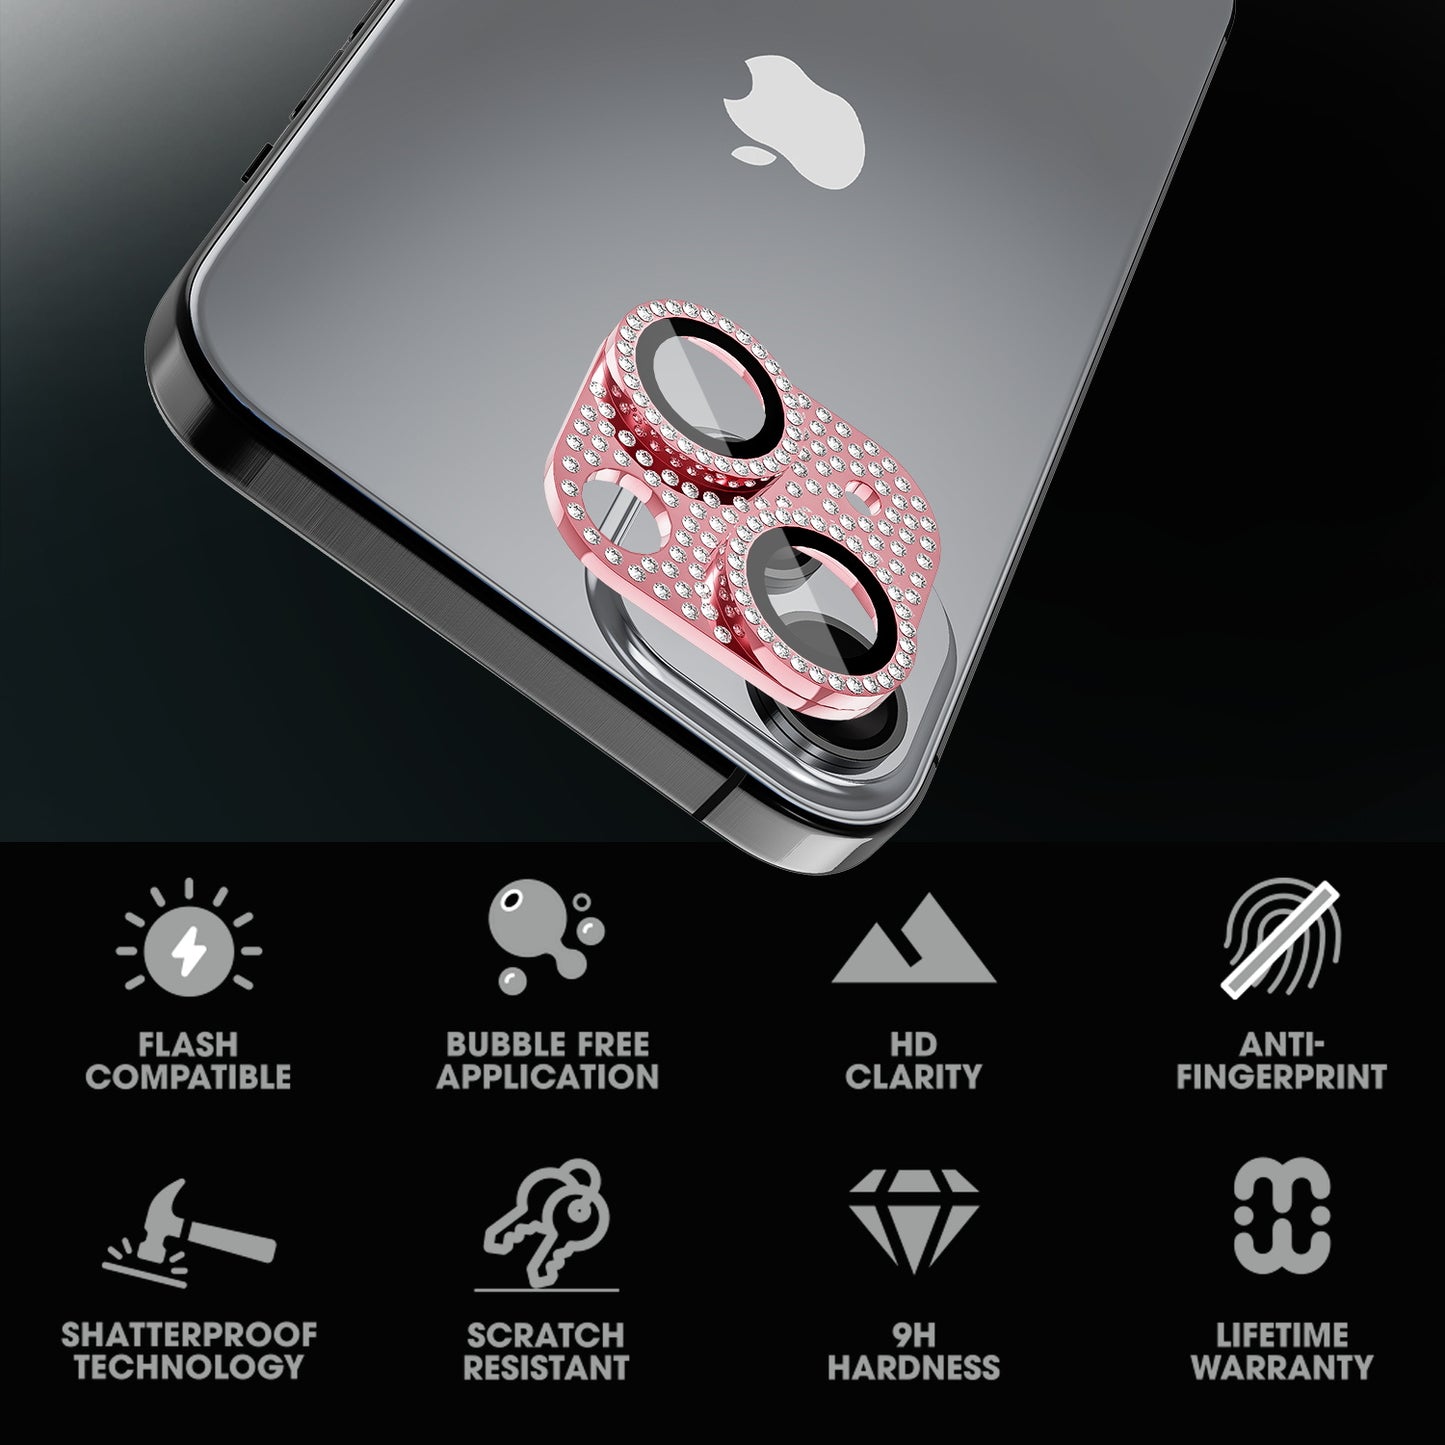 Vidrio Templado Para iPhone 13/ 13 Mini - MyBatPro GlamCam - Blanco MyBat Pro